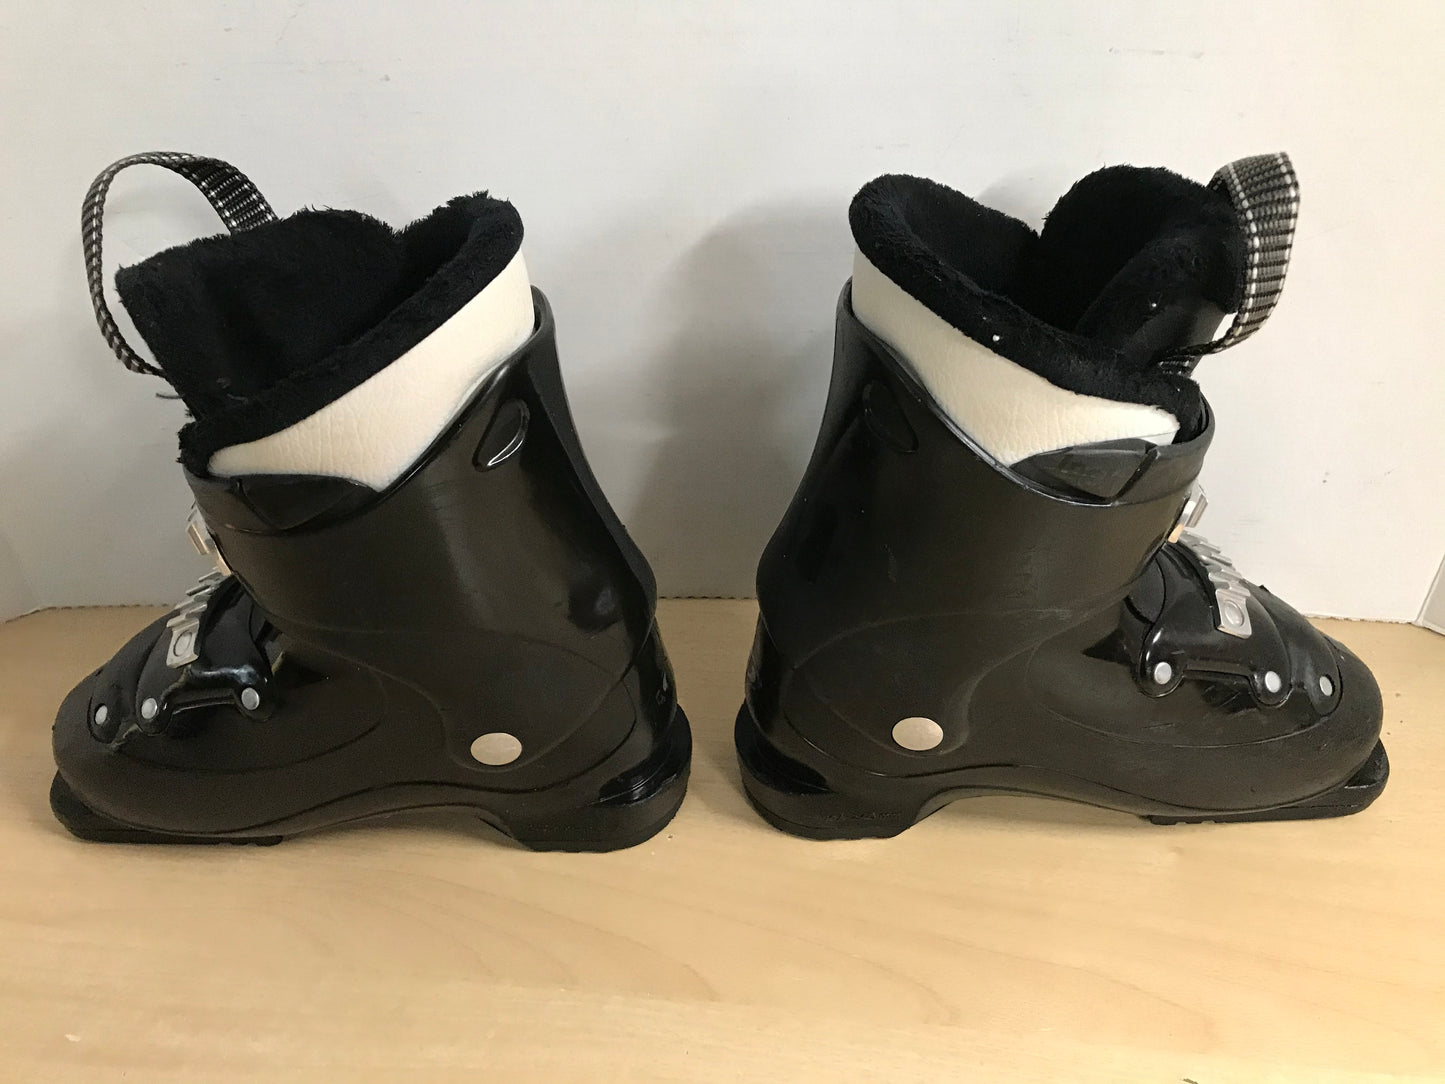 Ski Boots Mondo Size 19.5 Child Shoe Size 13 240 mm  Salomon Black White Minor Scratches